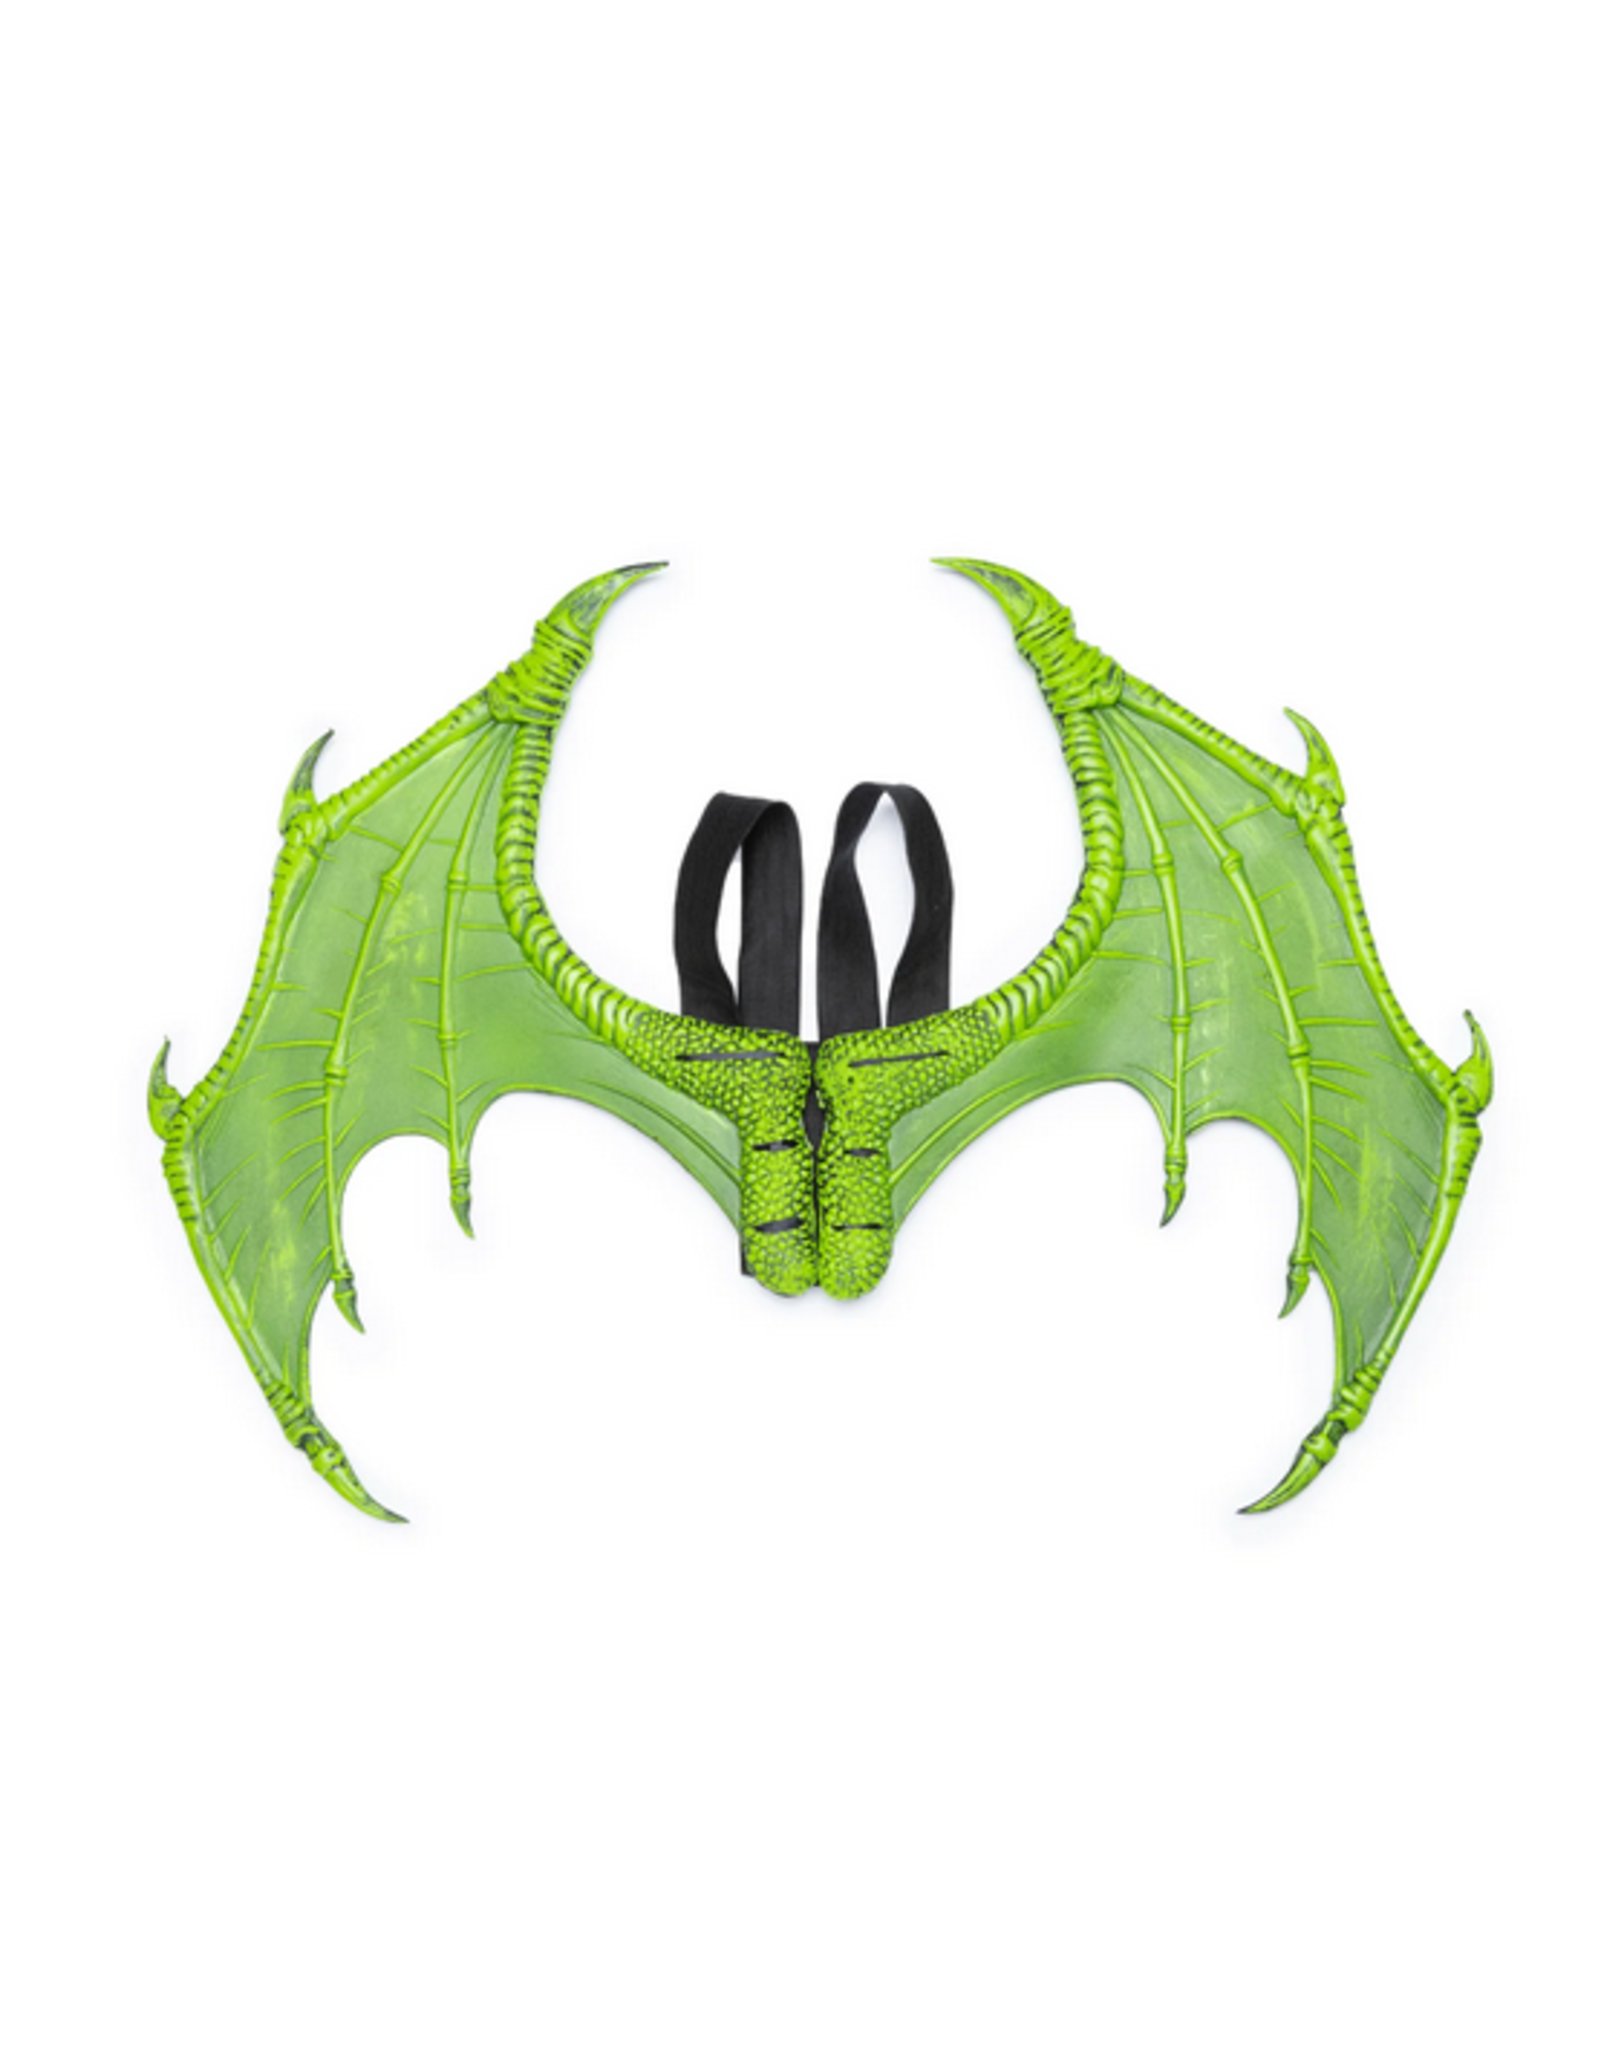 Creative Education Dragon Wings, Green